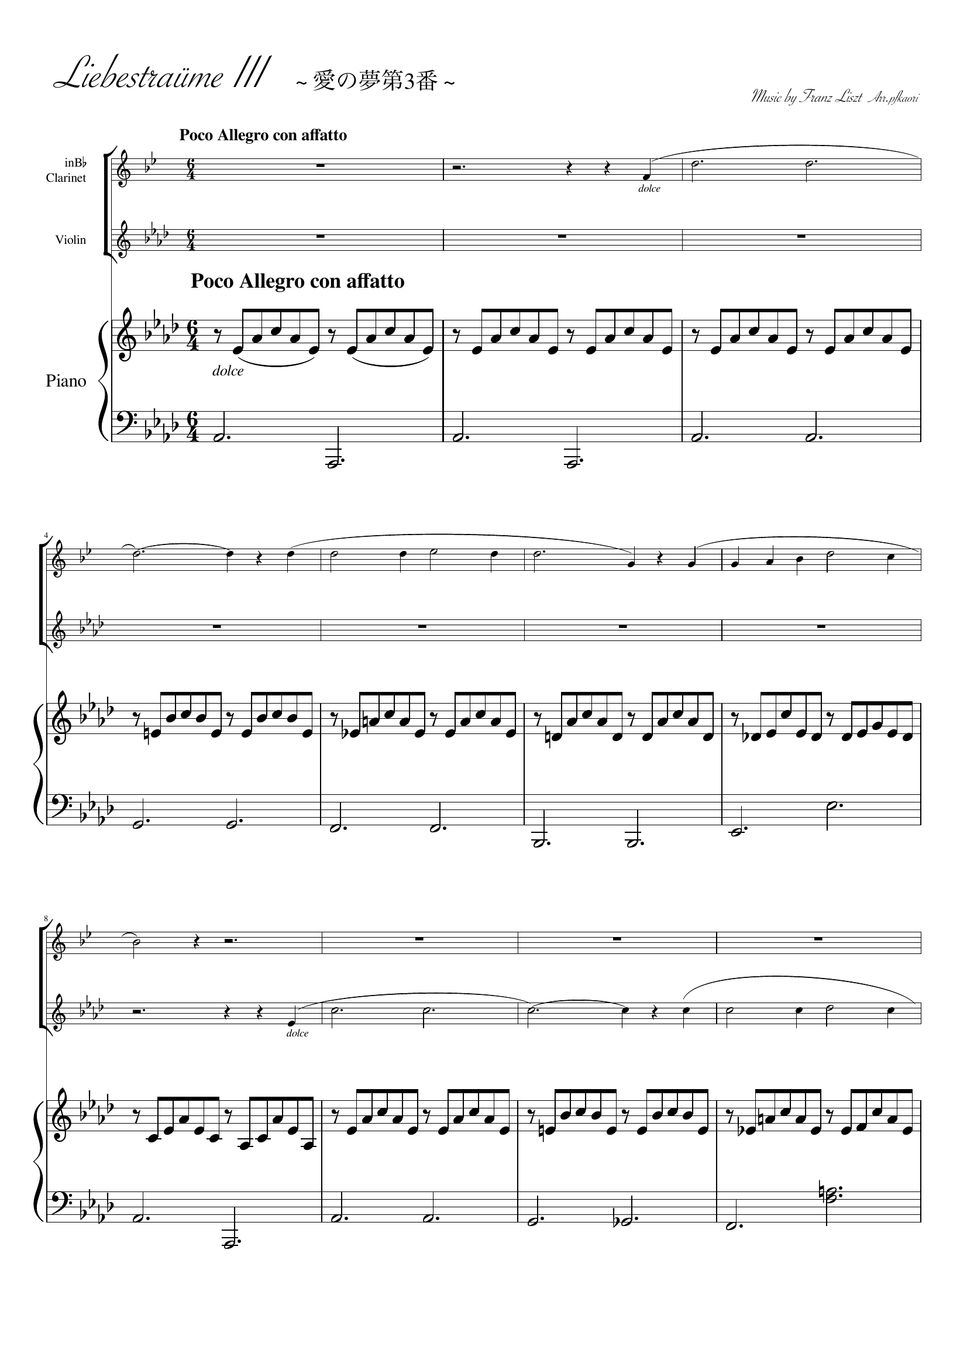 Franz Liszt - Liebestraum No. 3 (As・Piano trio / Violin & clarinet) by pfkaori